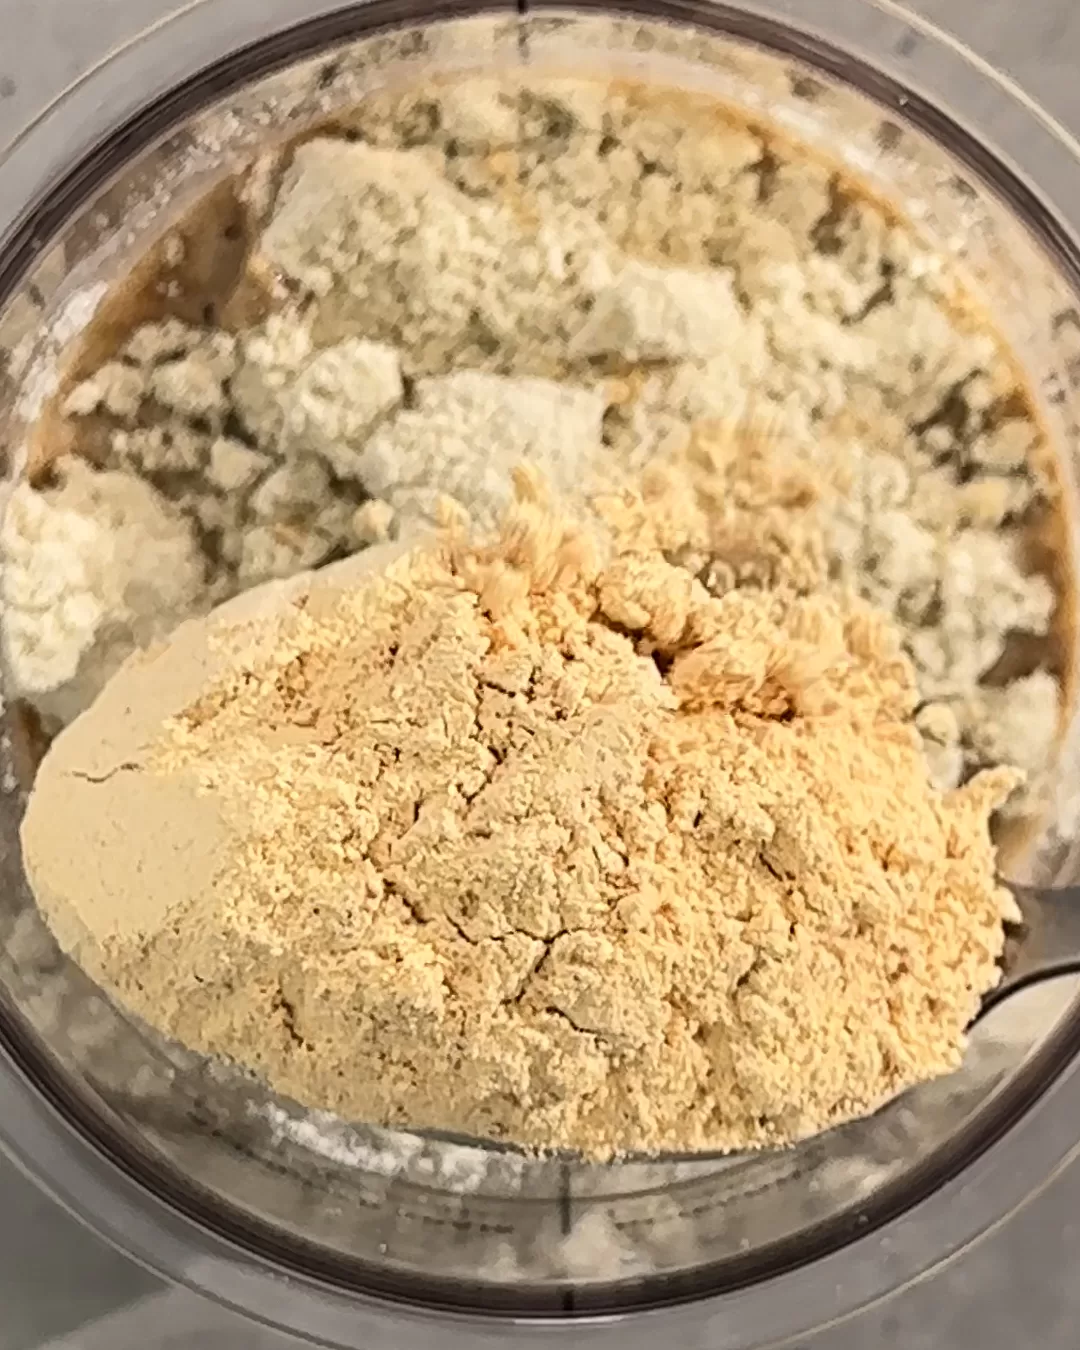 my protin powdered peanut butter